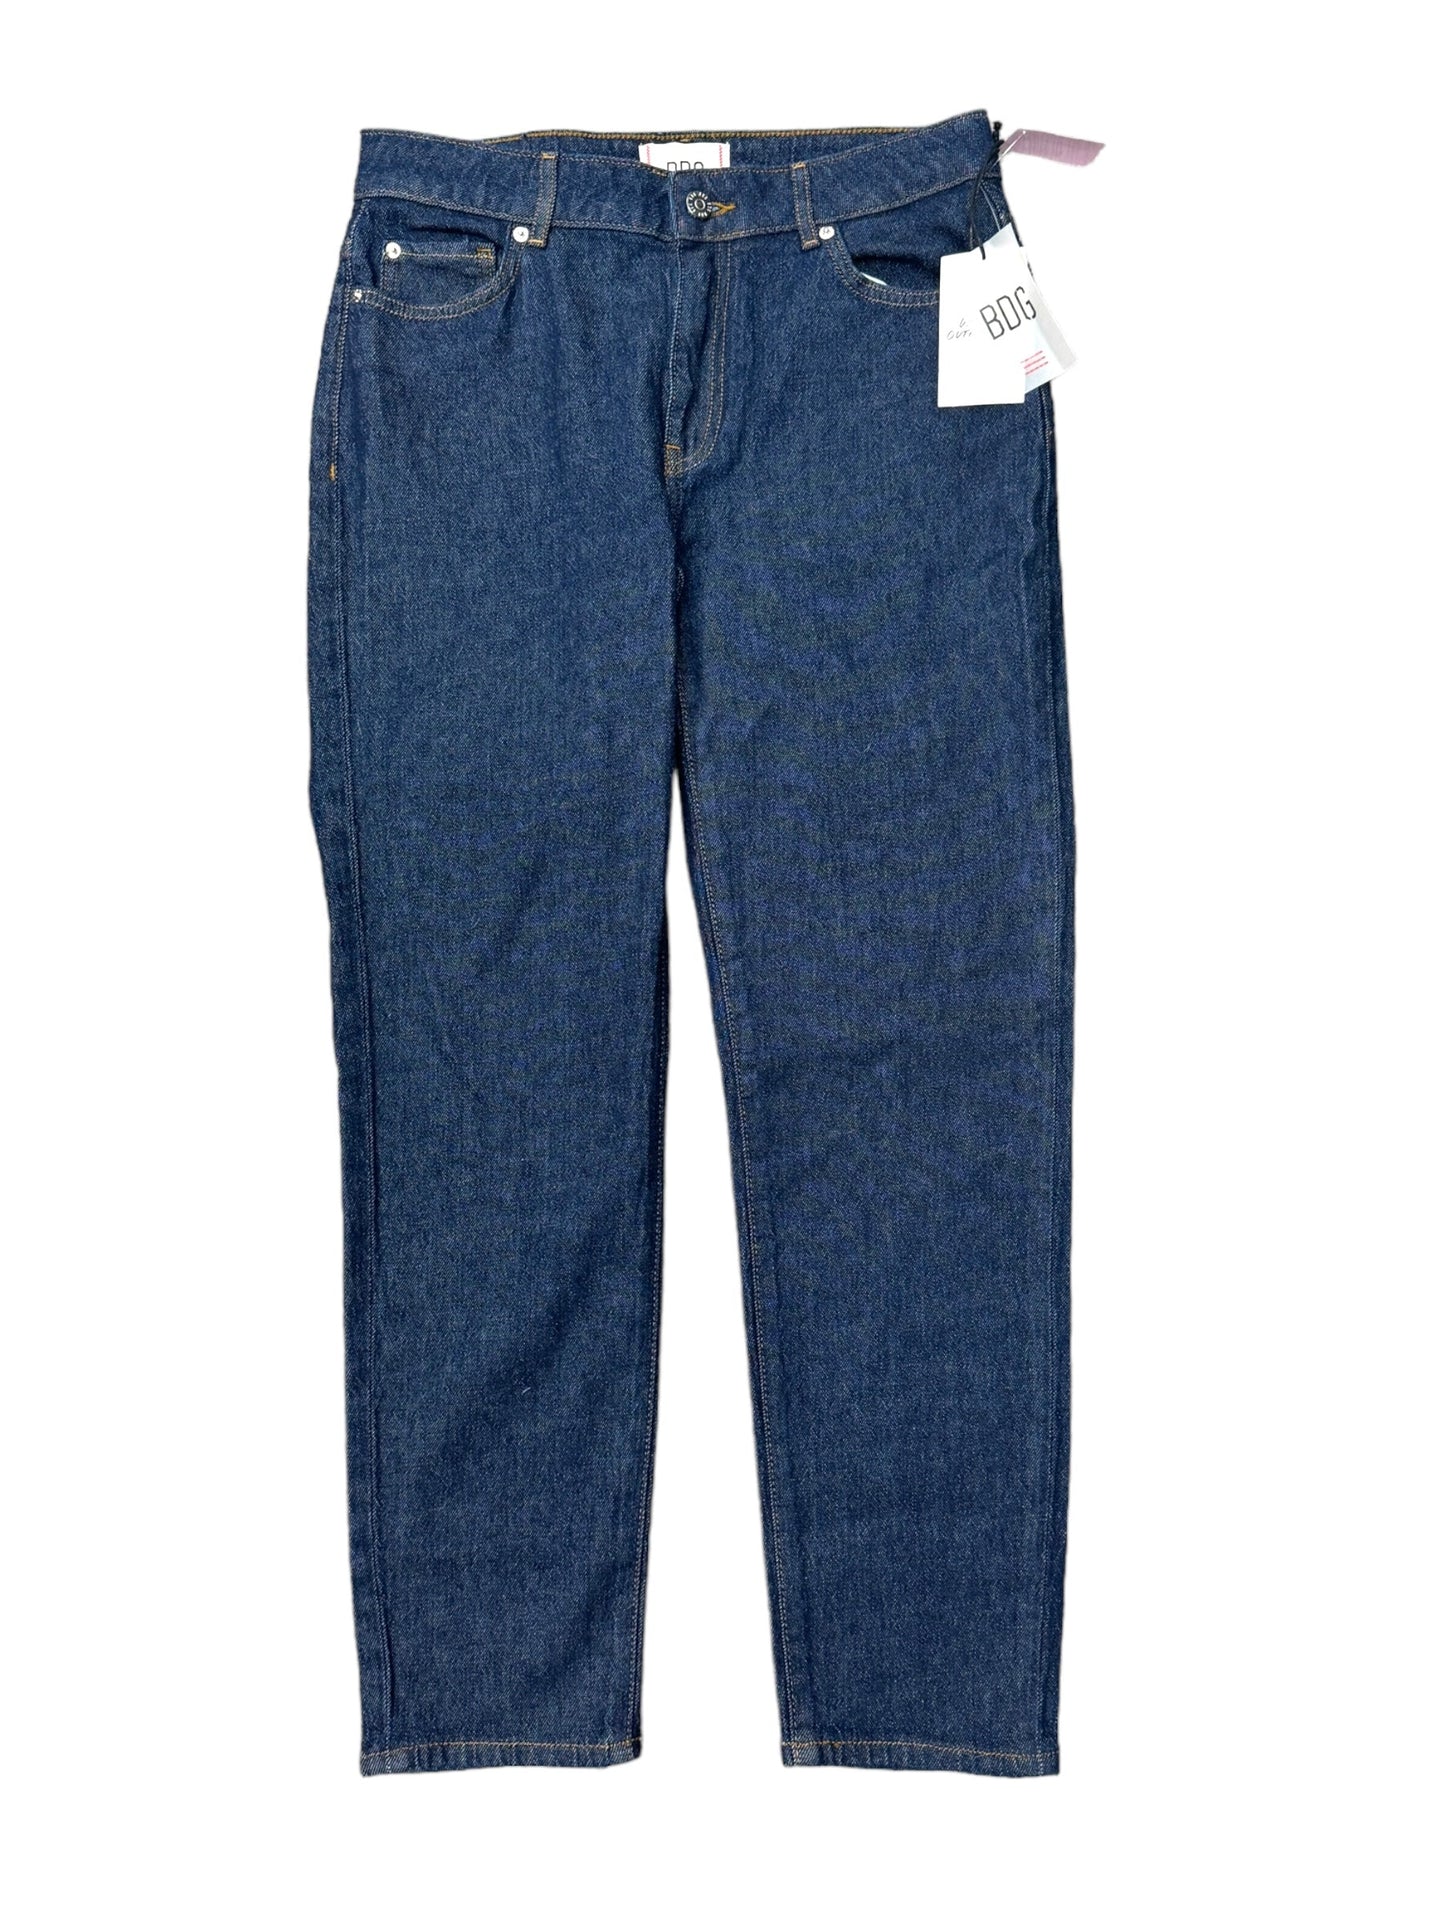 Blue Denim Jeans Straight Bdg, Size 4